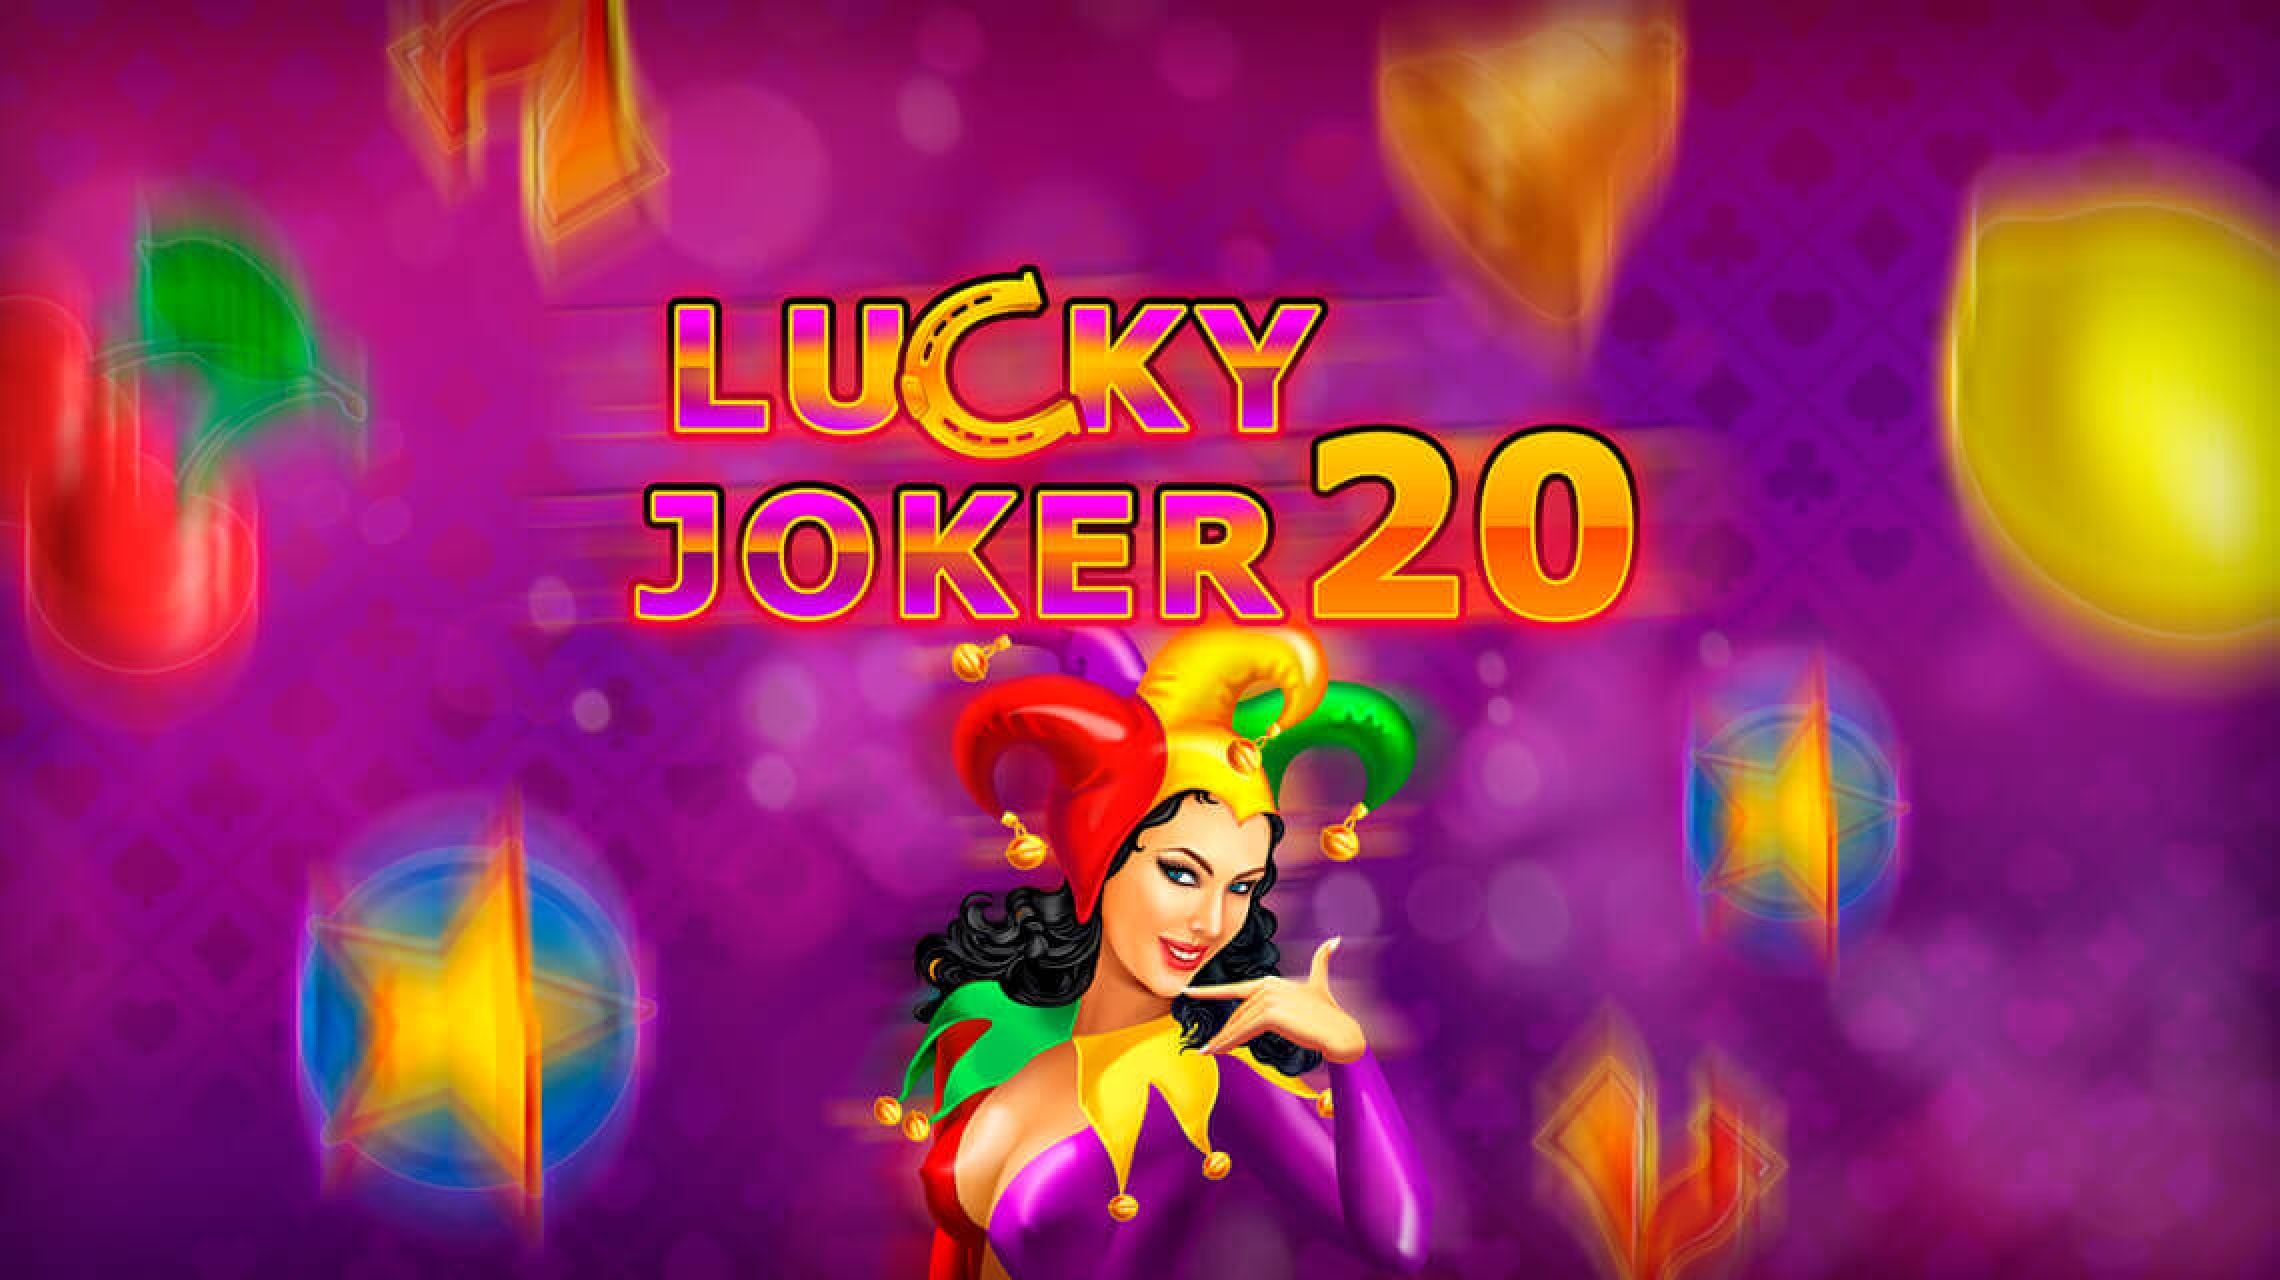 Lucky Joker 20 demo